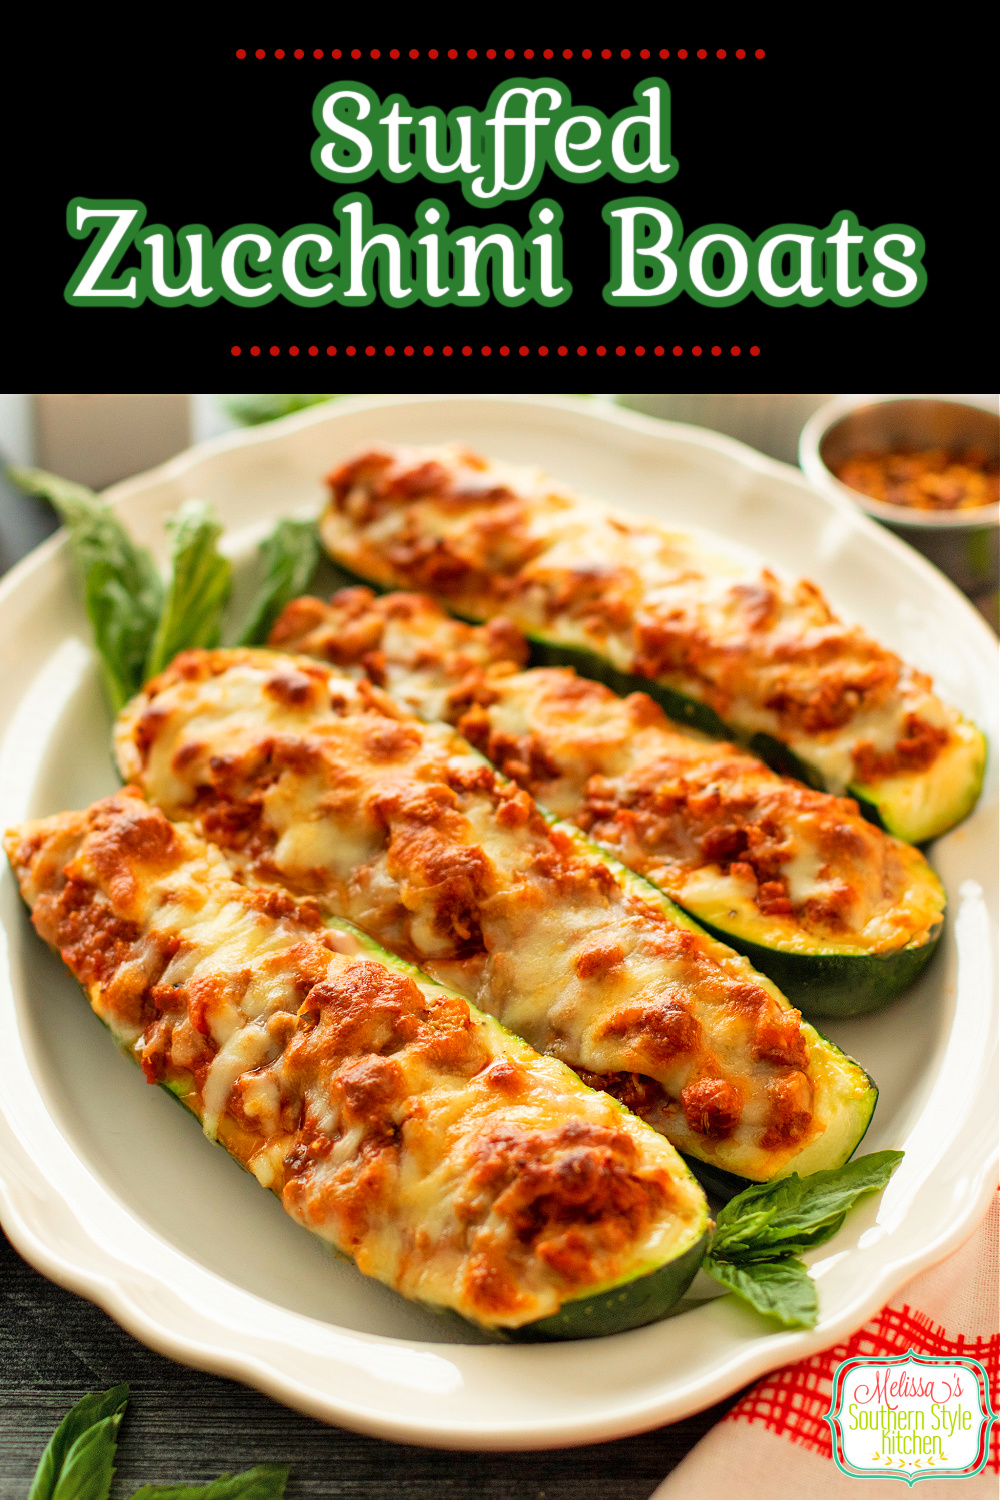 These Italian sausage Stuffed Zucchini Boats are a delicious way to serve whole fresh zucchini as an entrée #stuffedzucchini #stuffedzucchiniboats #Italiazucchini #bakedzucchini #lowcarbzucchinirecipes #ketozucchinirecipes #bestzucchiniboatsrecipe